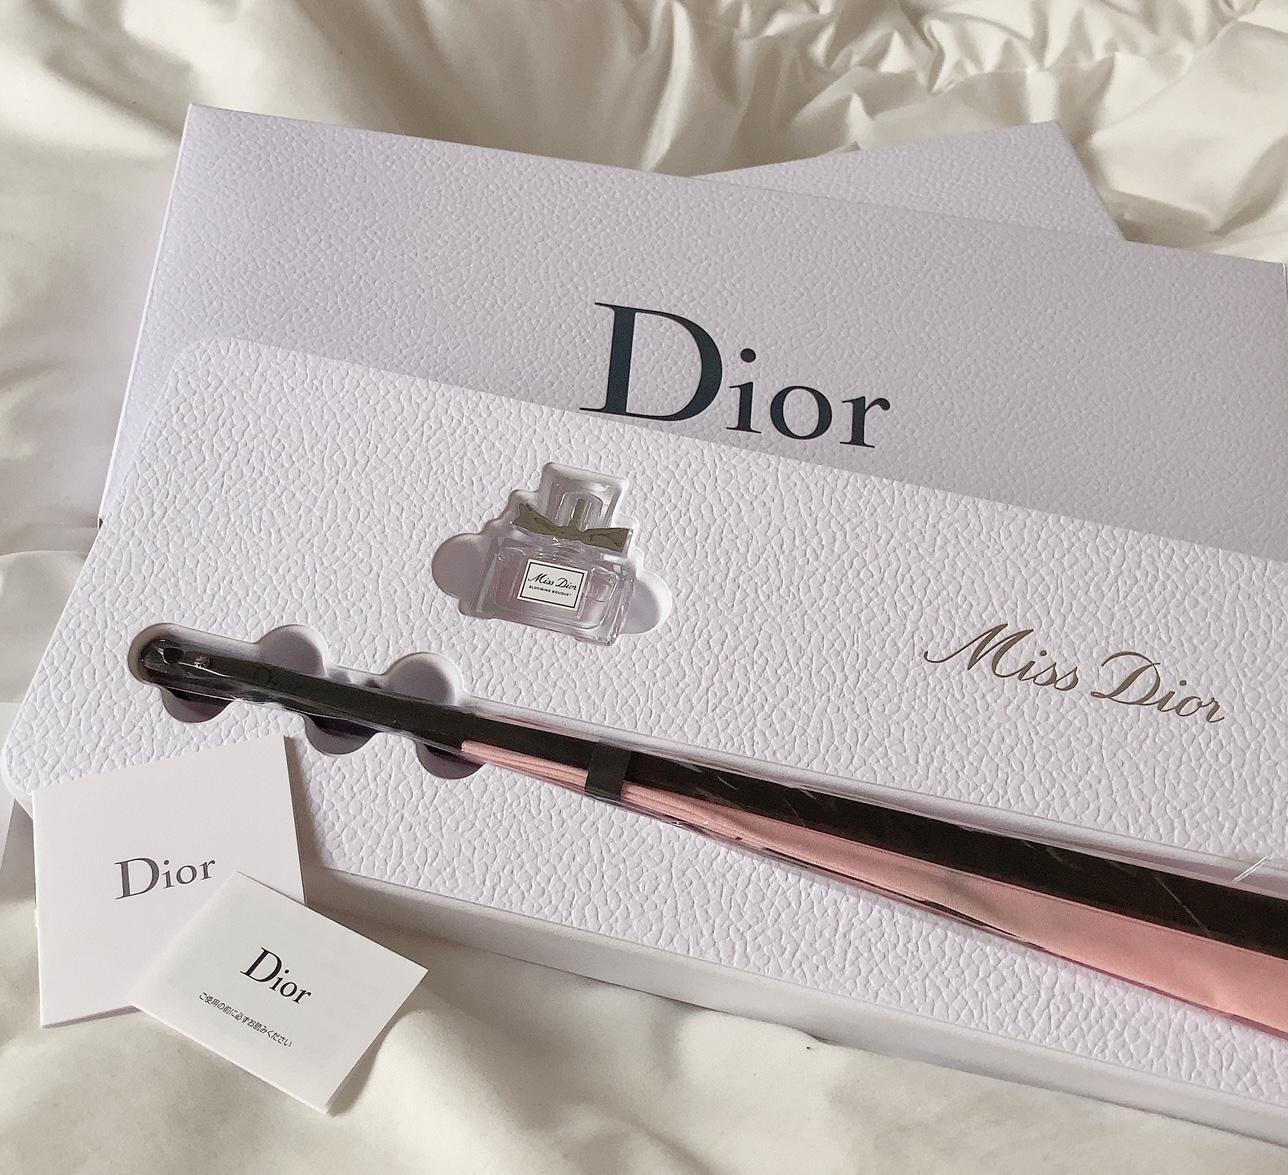 Dior☆BirthdayGift＆購入品 | NEKO☆mimiさんのブログ - @cosme ...